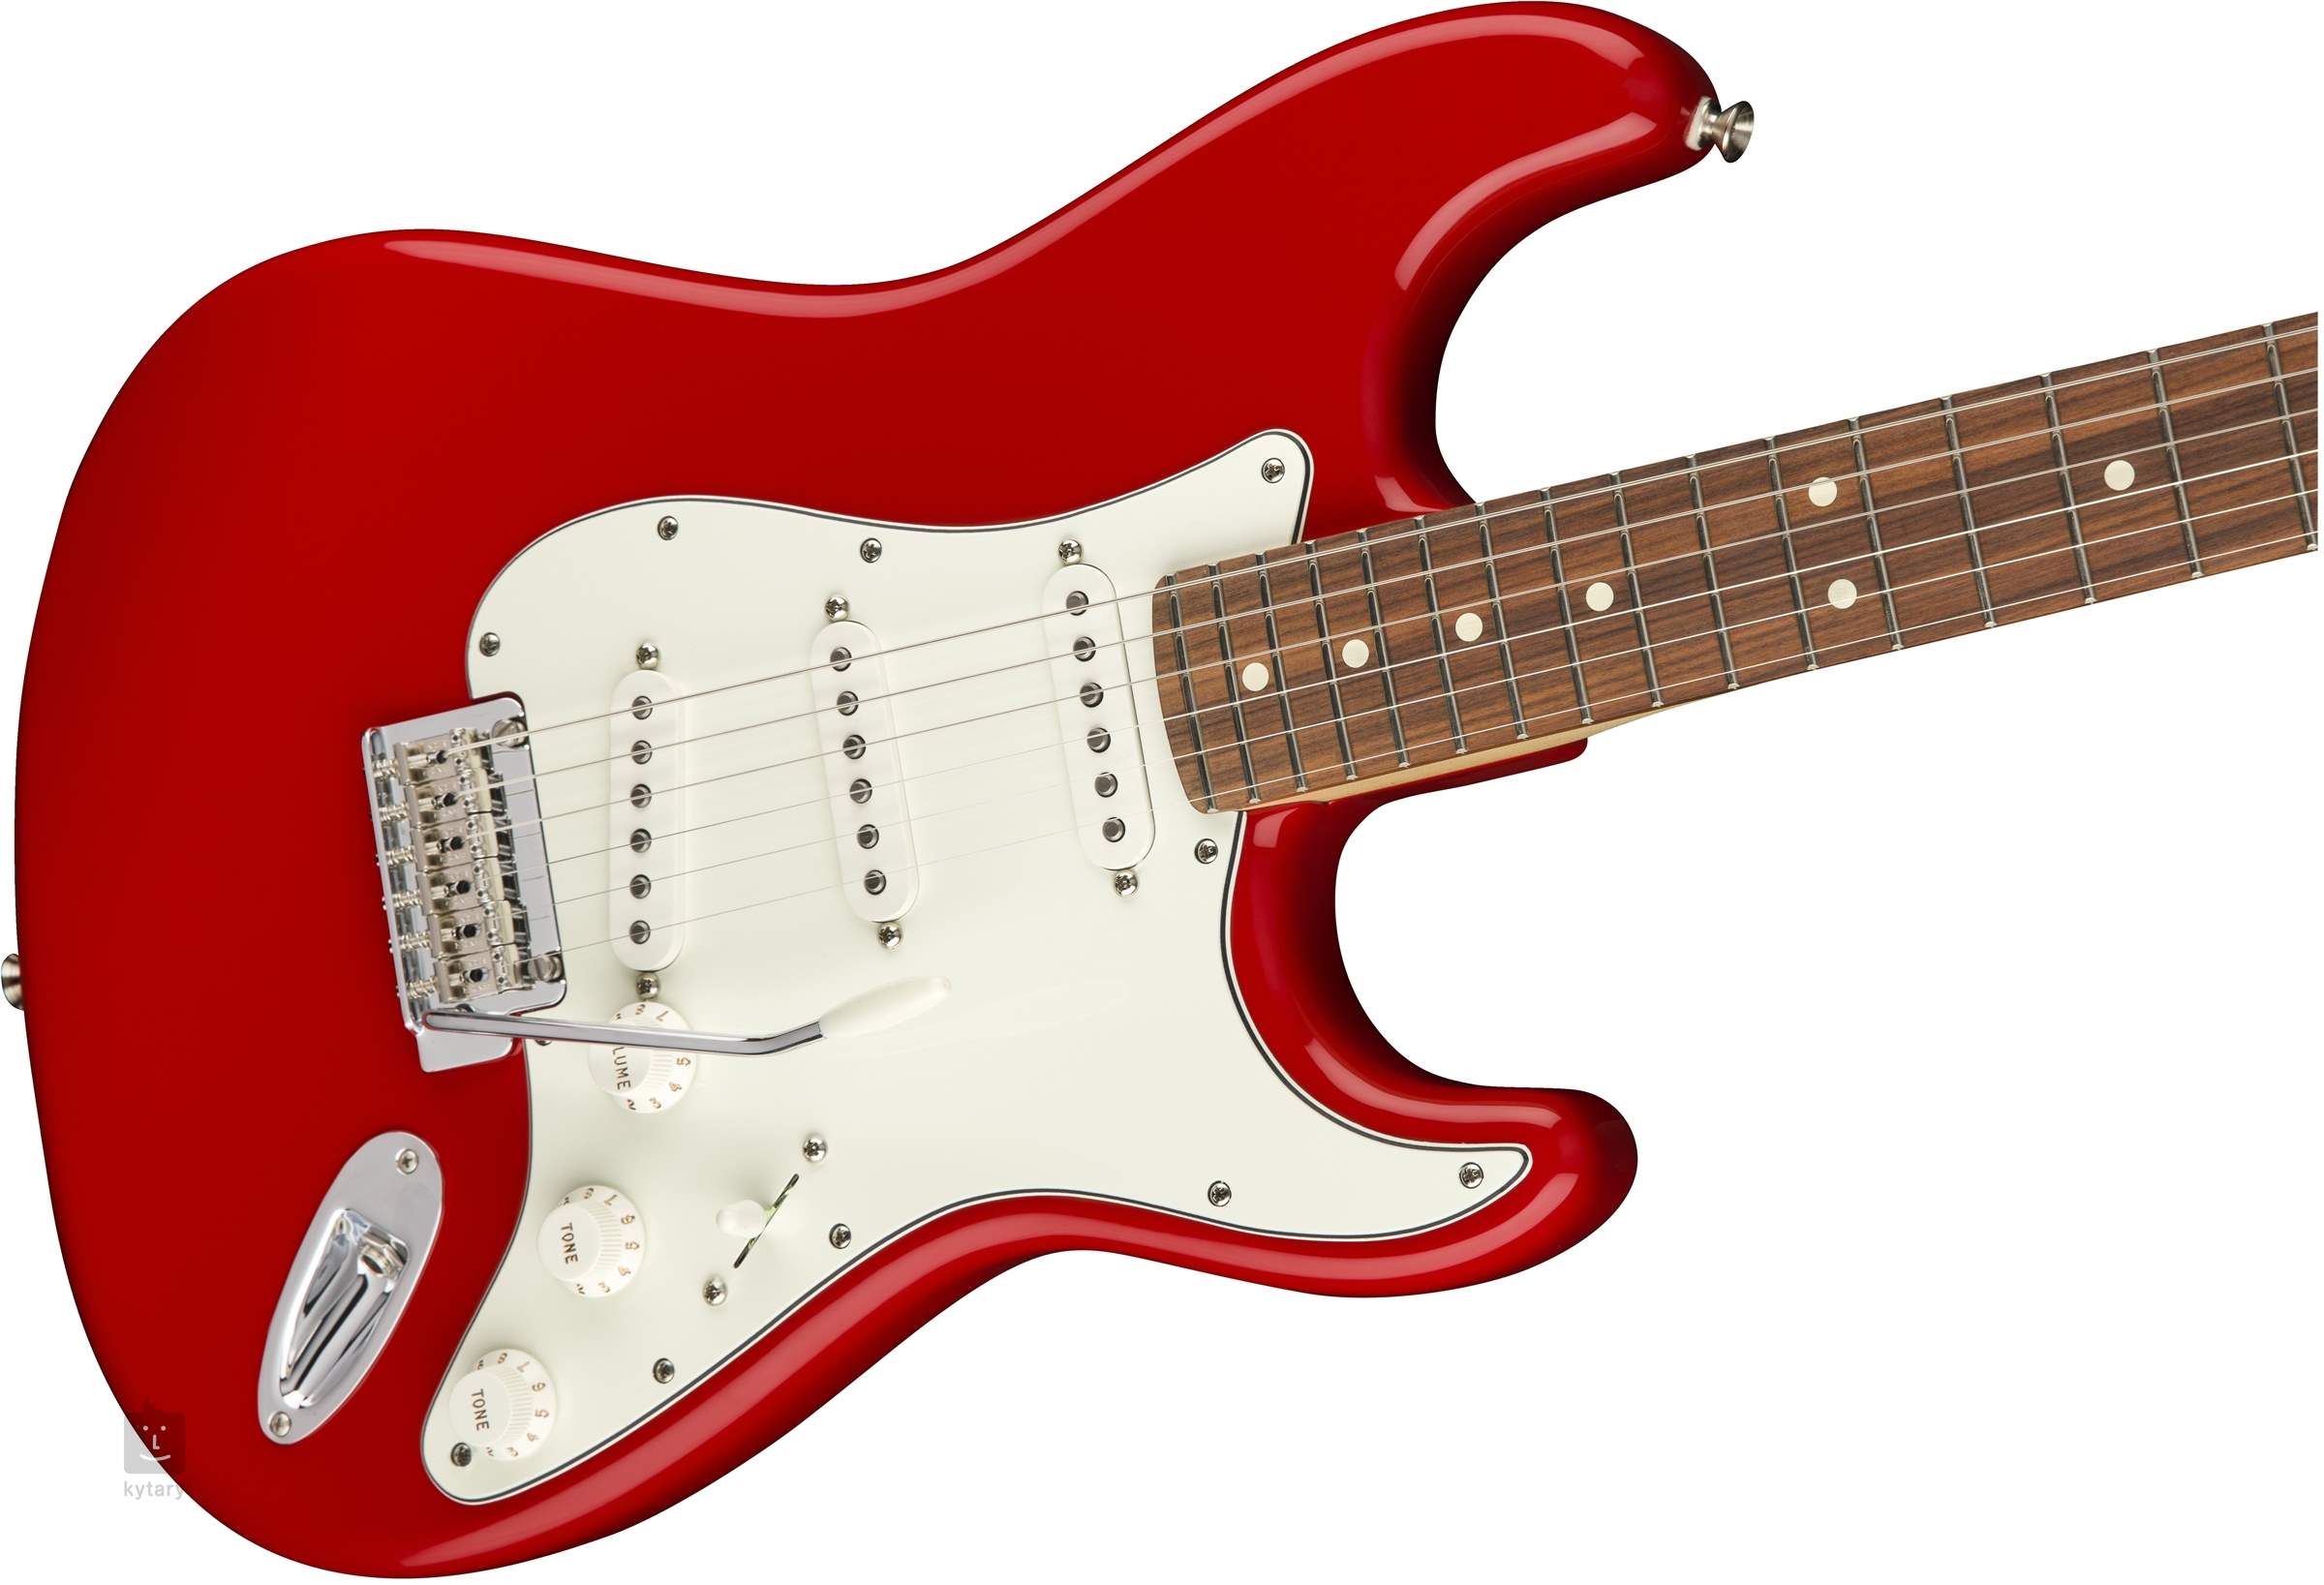 Squier mm stratocaster. Гитара Fender Stratocaster Red. Fender Stratocaster красный. Samick Stratocaster красный. Страт.